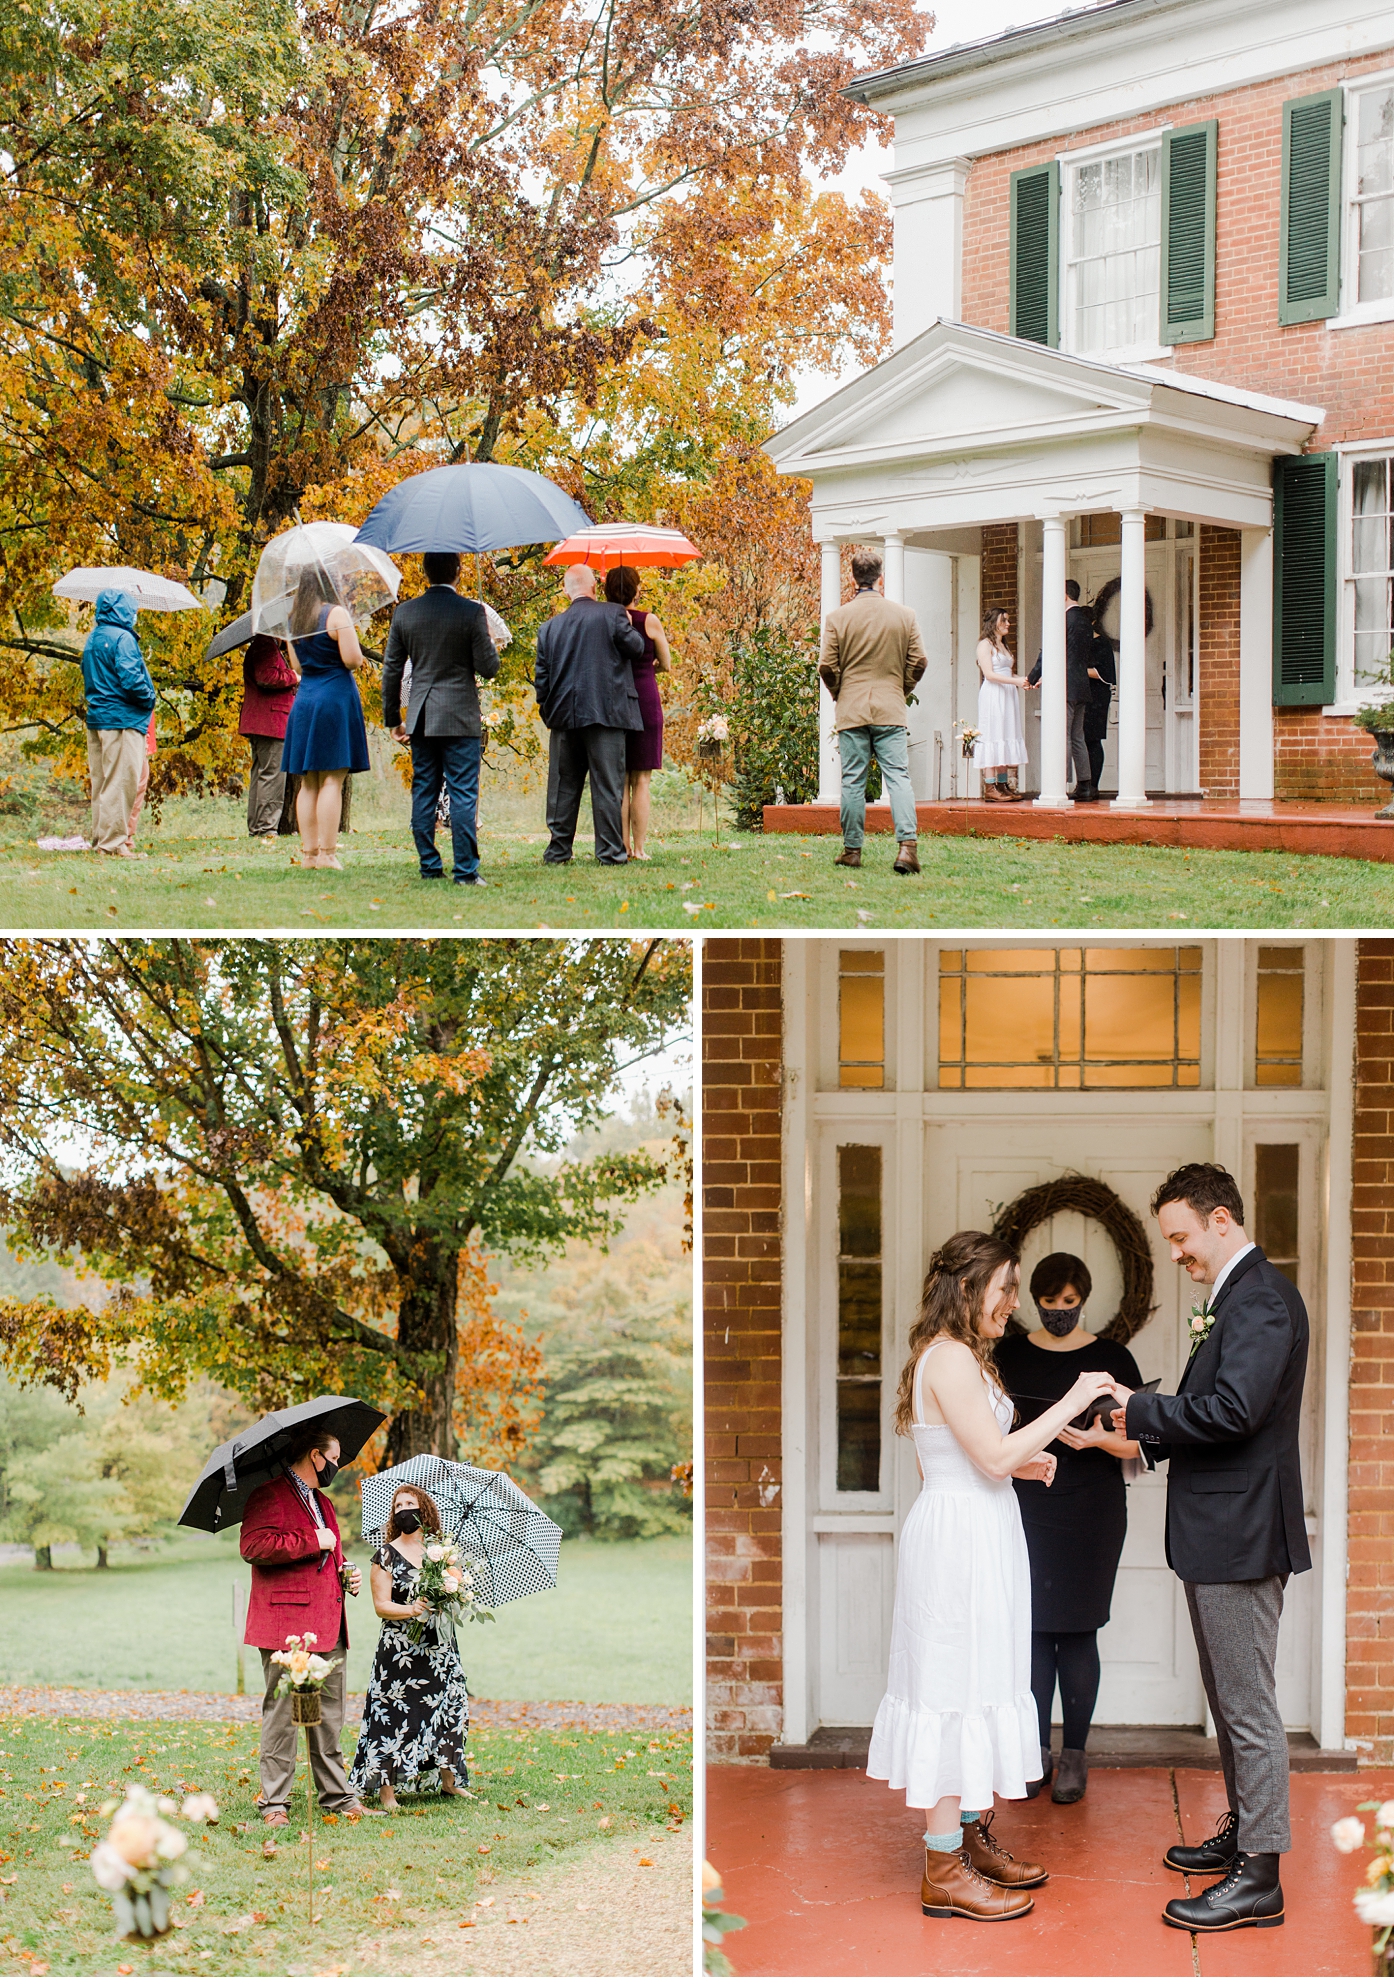 Intimate Outdoor Wedding Ceremony in Rain